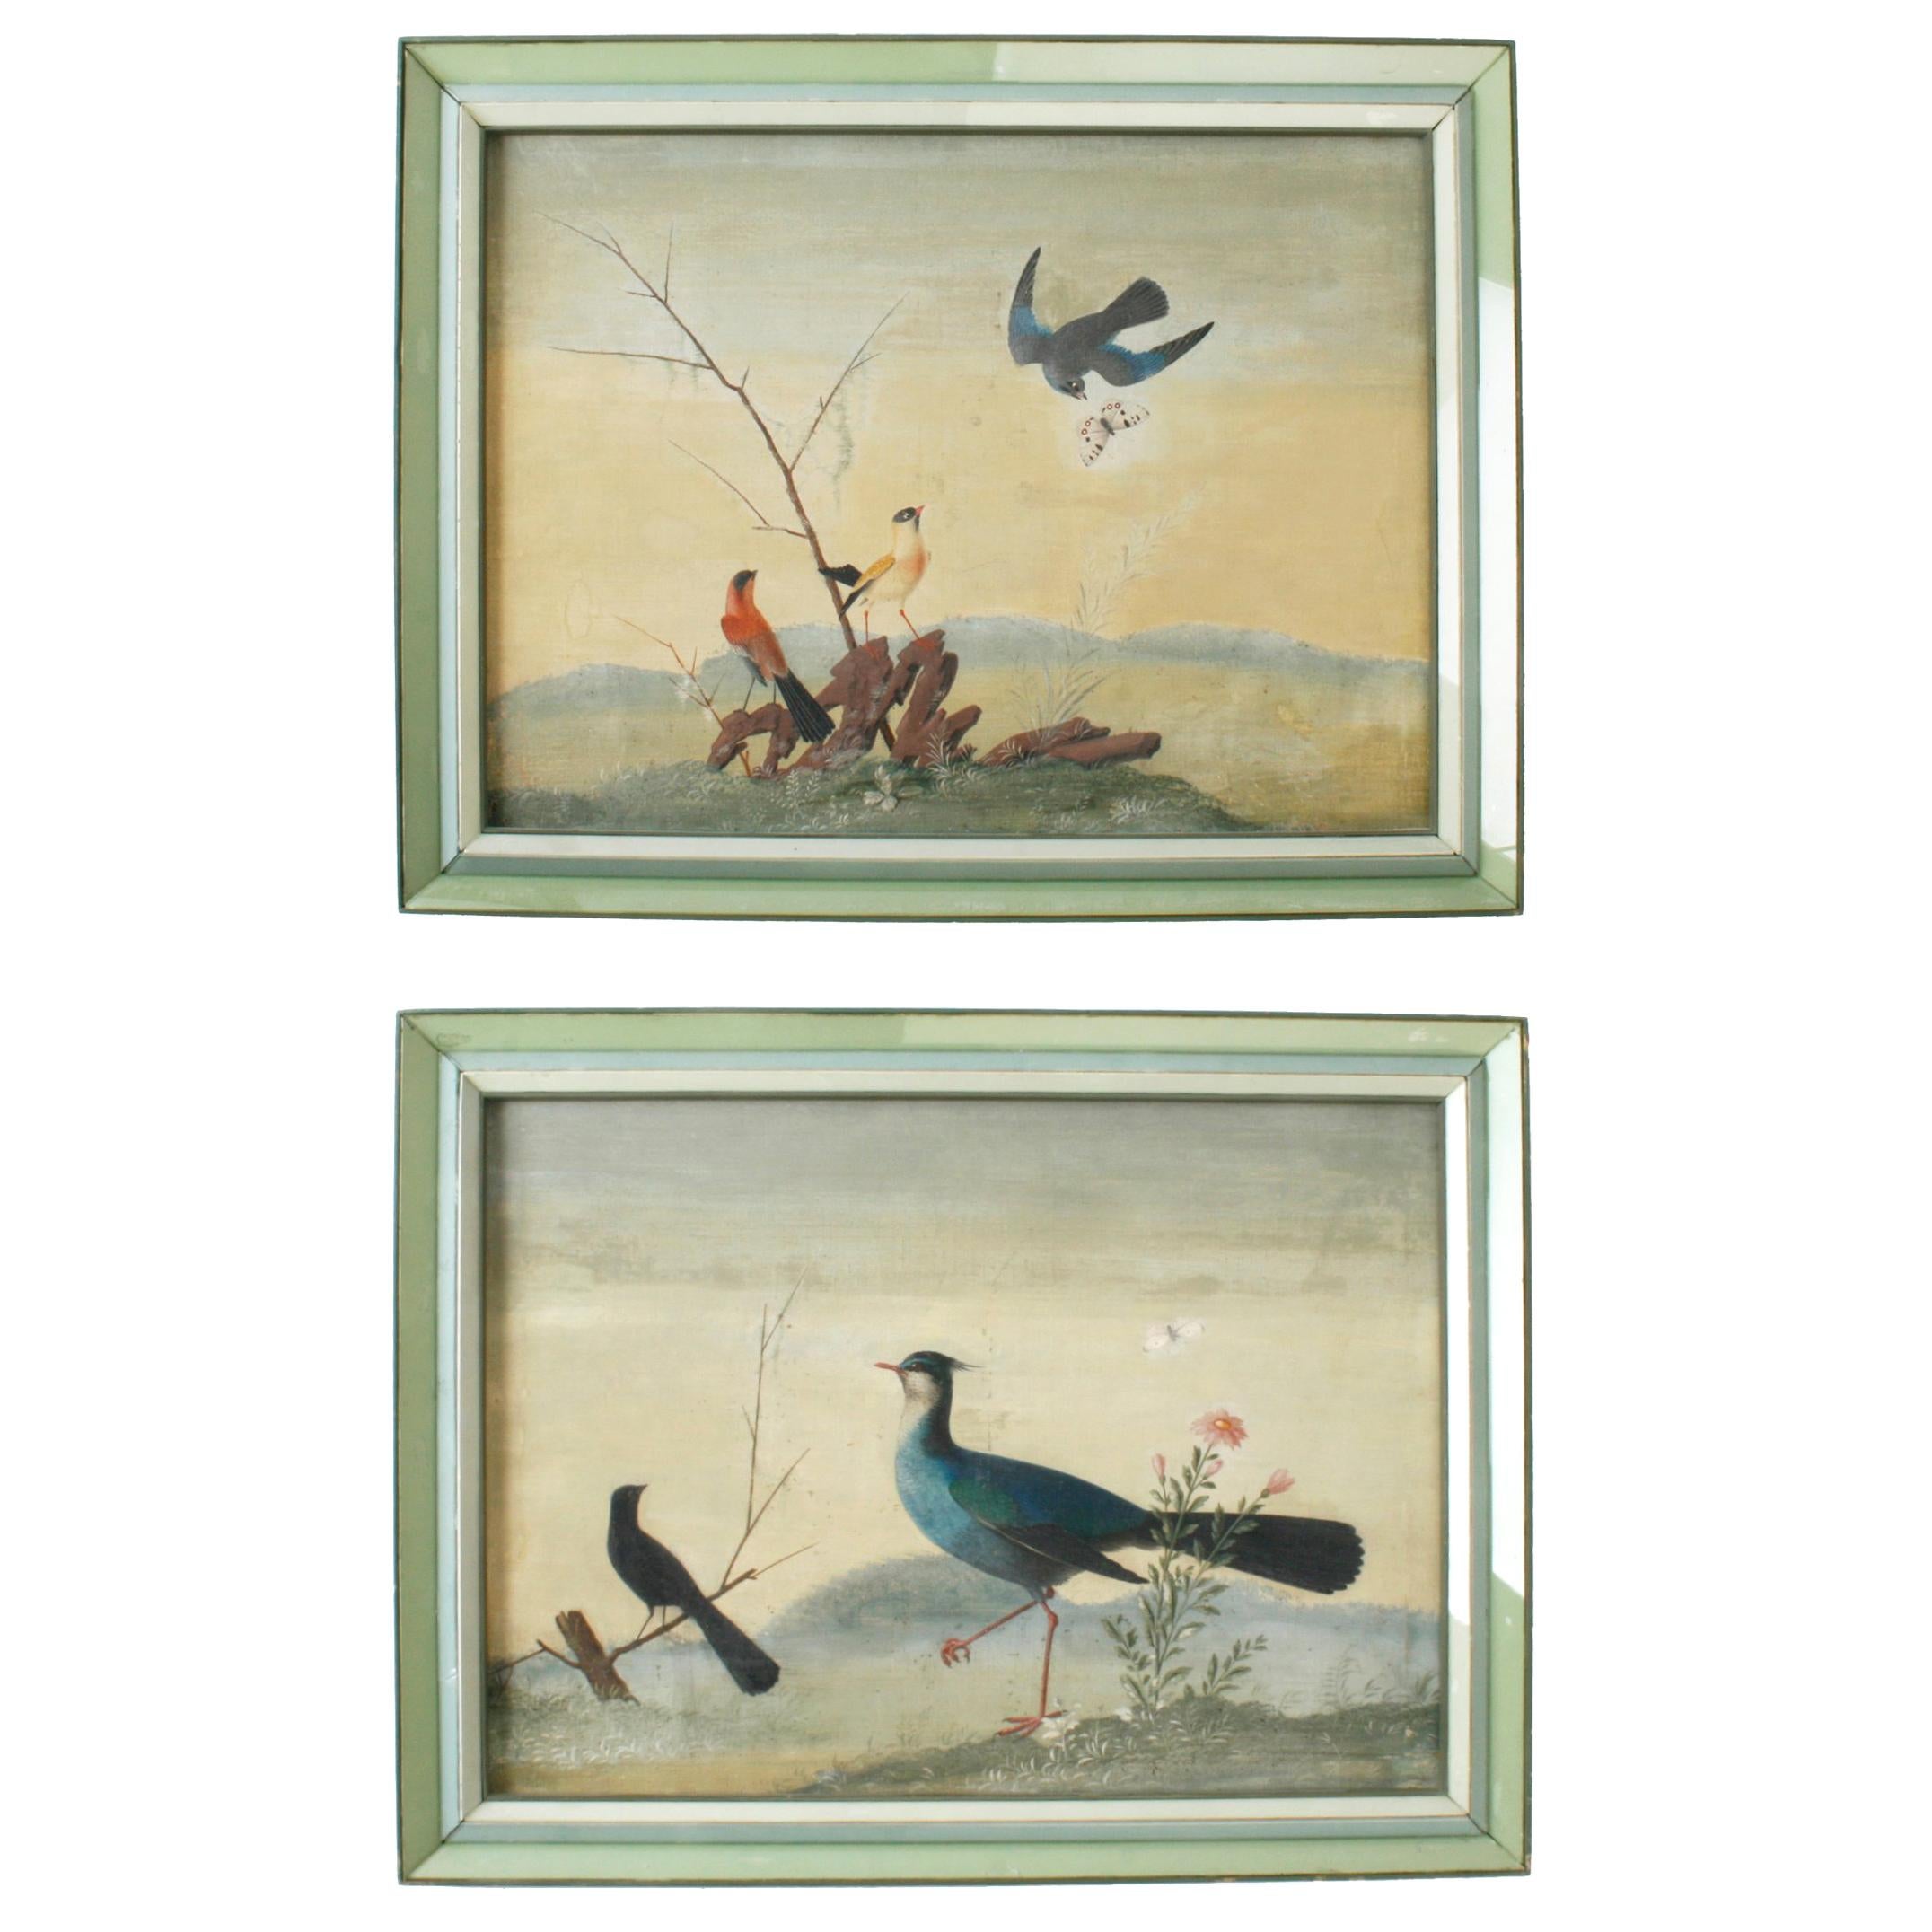 Chinese Export Oil Paintings of Birds in Glass Veneer Frames, 19th Century